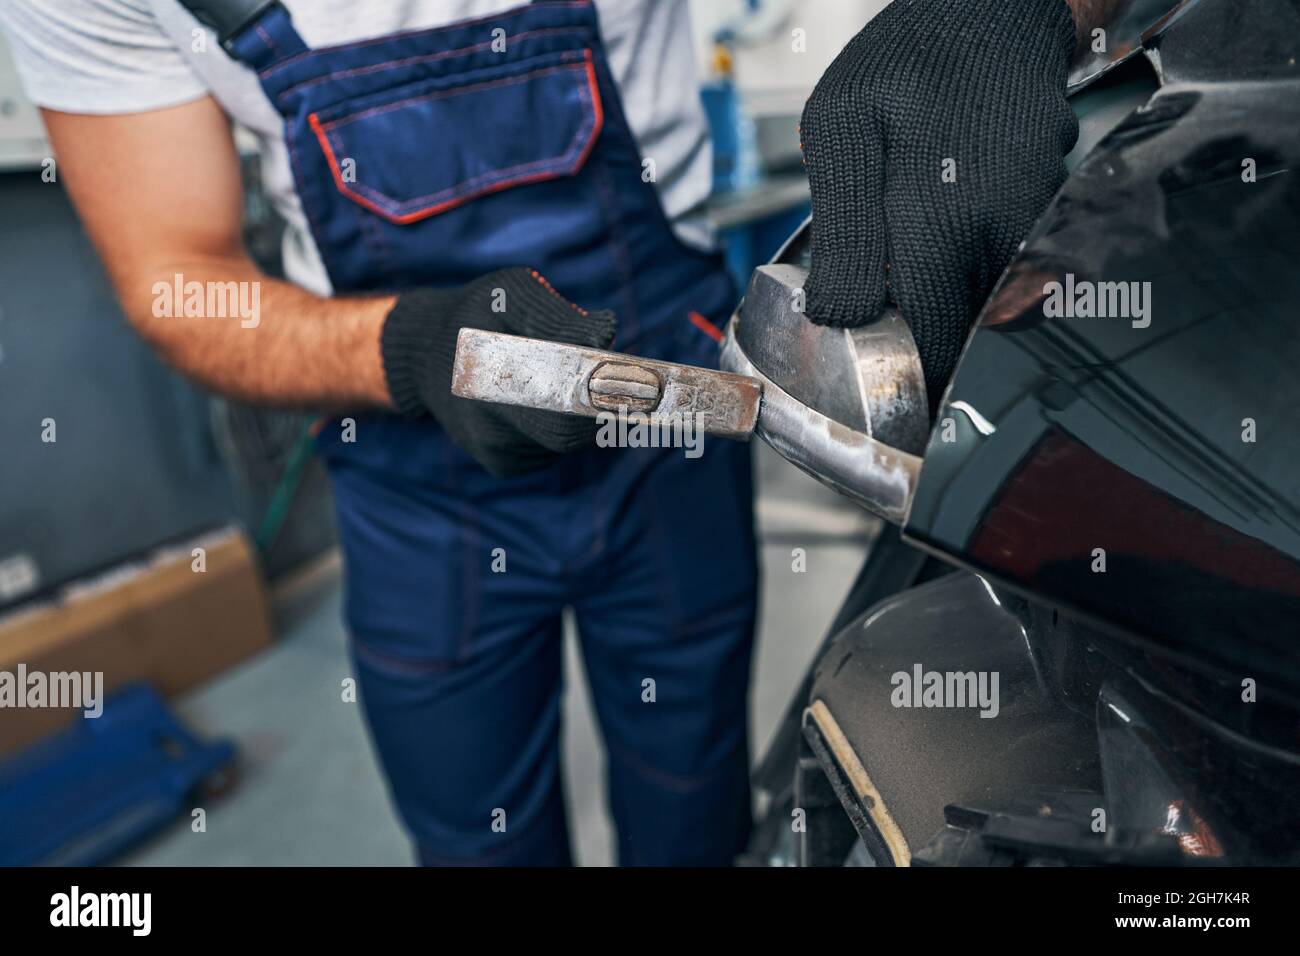 Auto mechanic peening car body surface with hammer Stock Photo